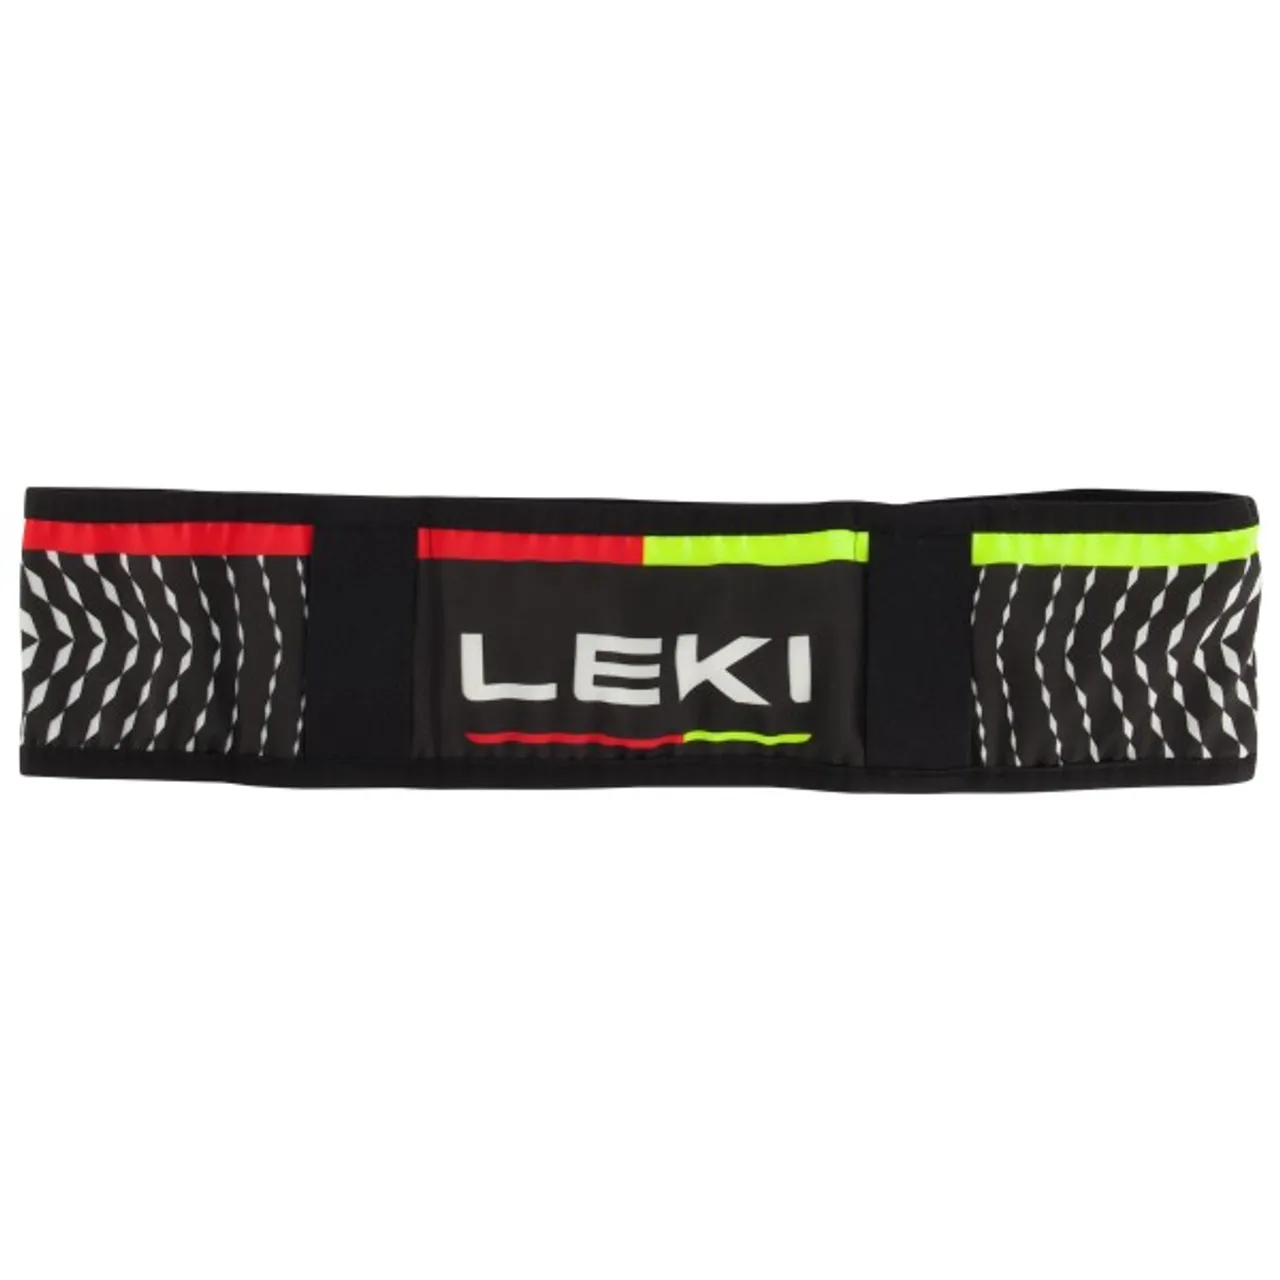 Leki - Trail Running Pole Belt - Walking pole accessories size M - L, black/white